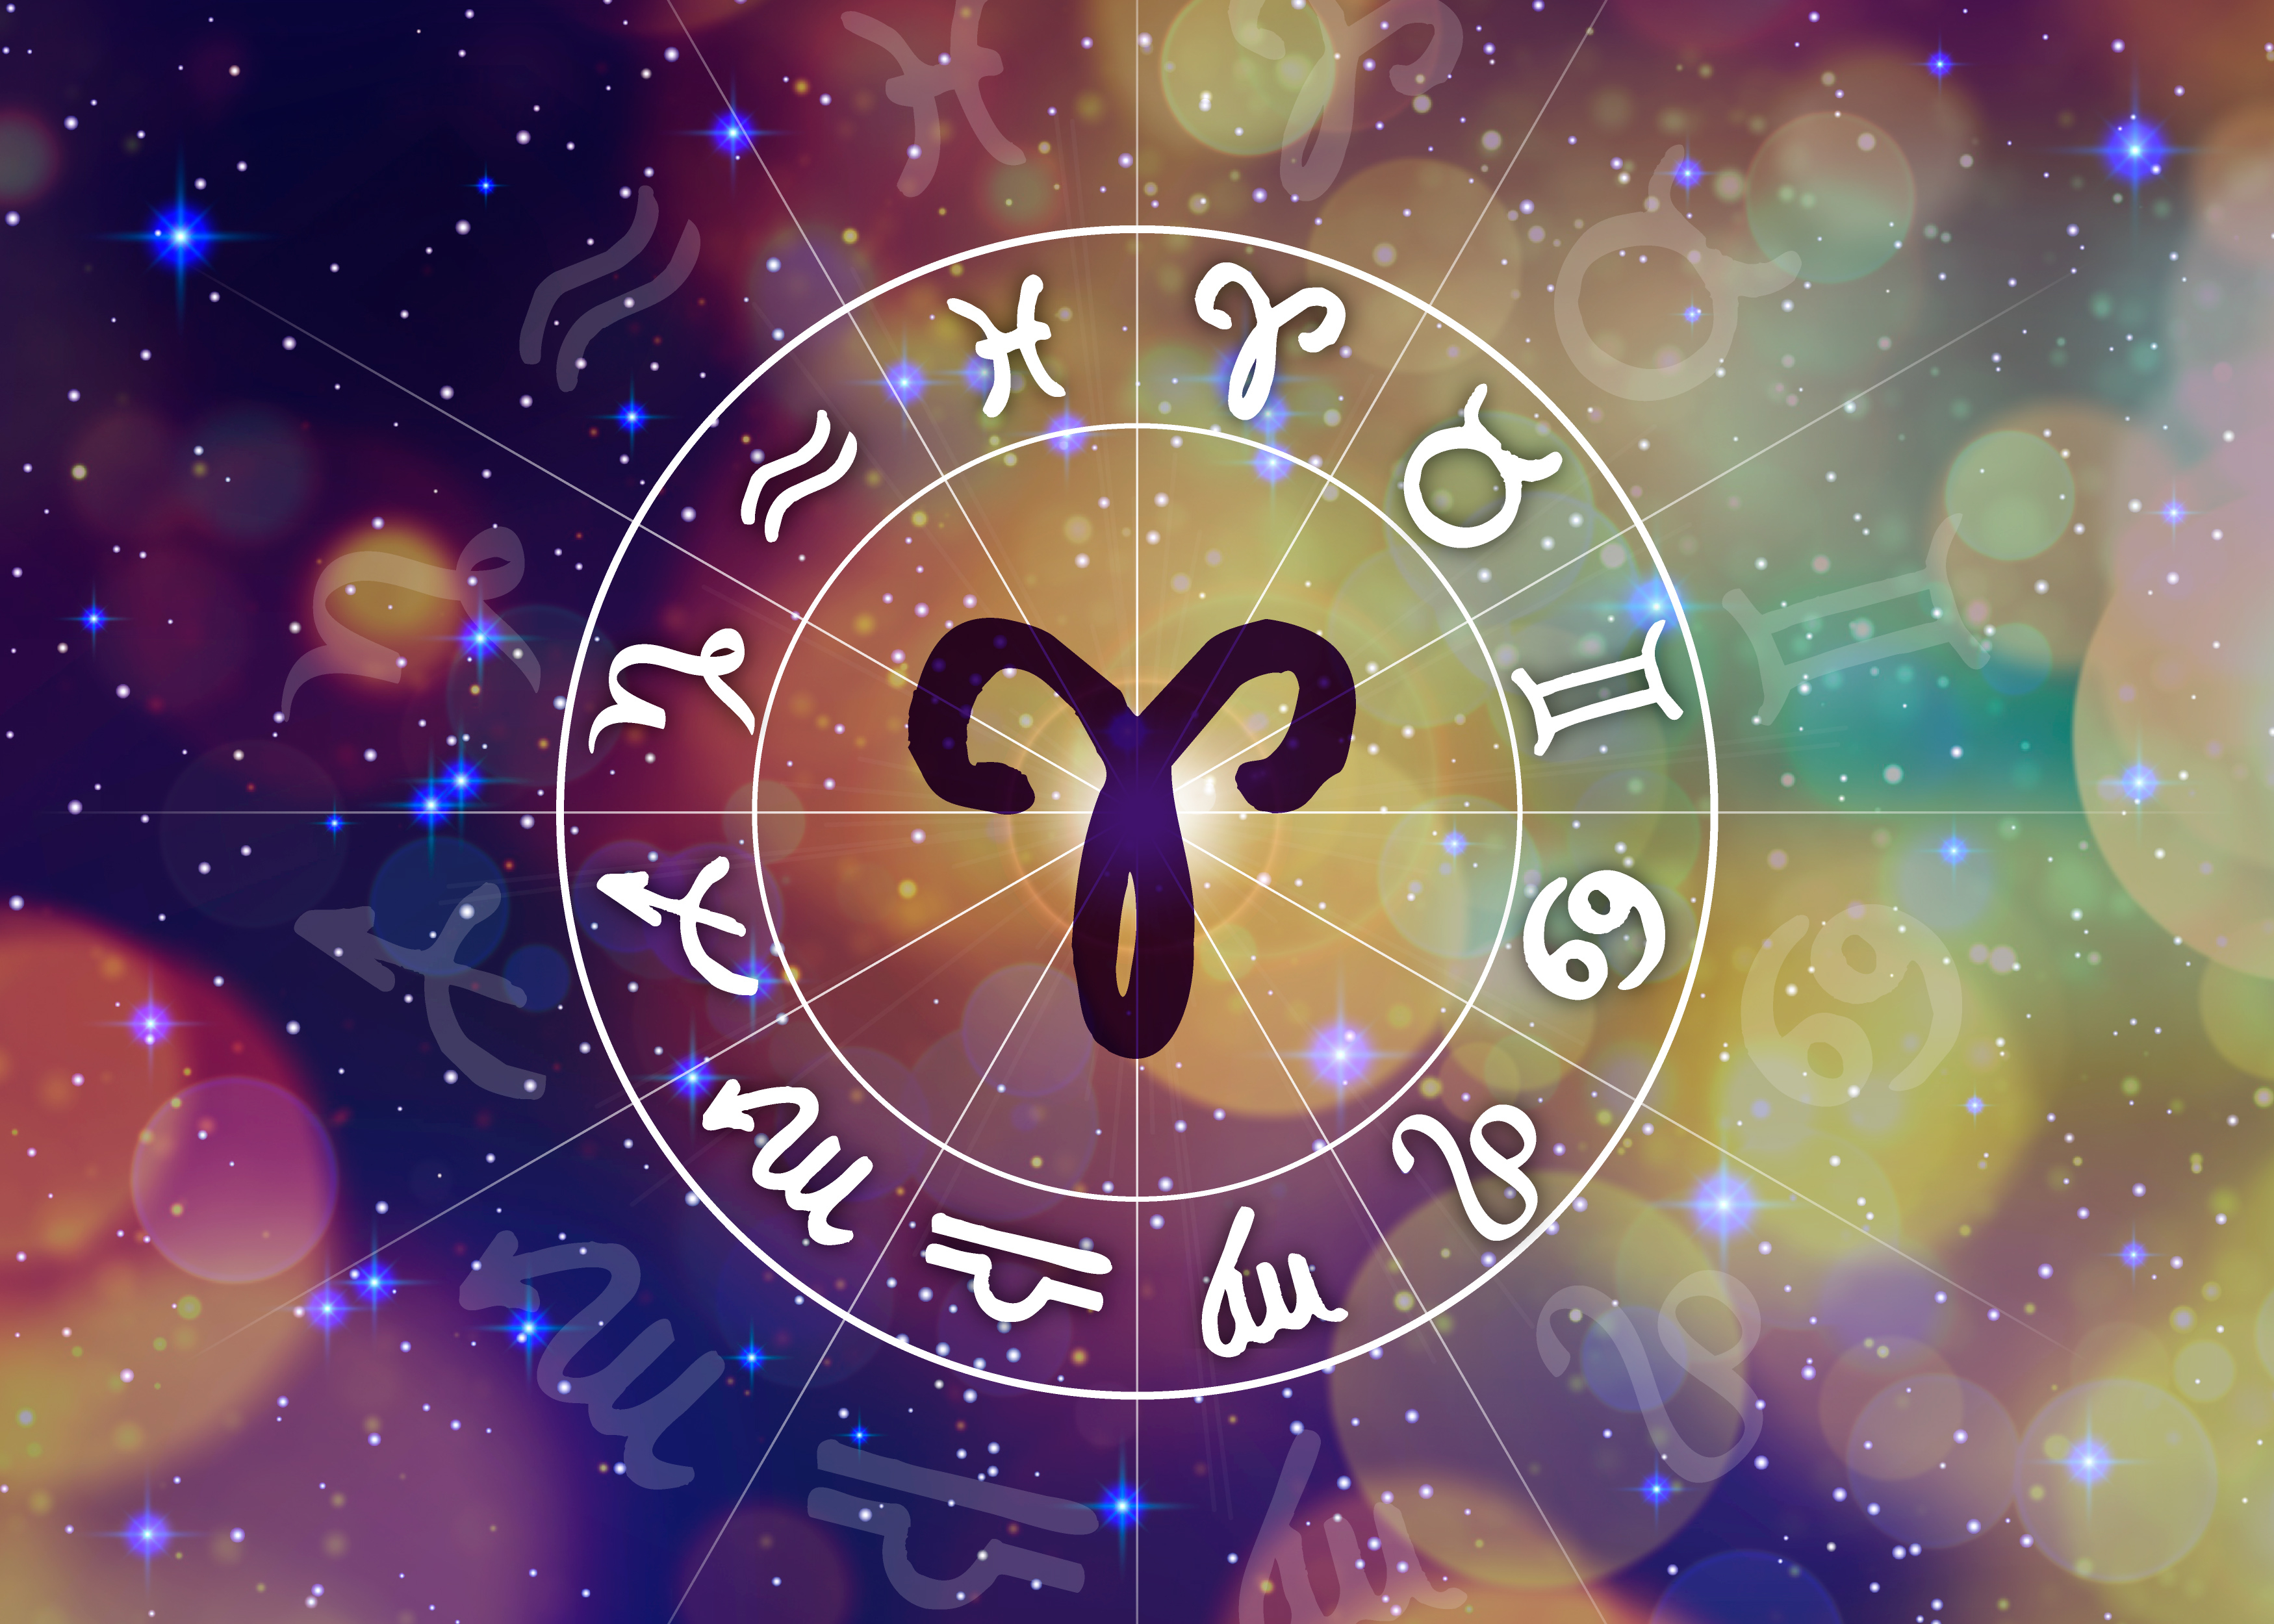 Aries horoscope inside the Zodiac wheel | Source: Shutterstock